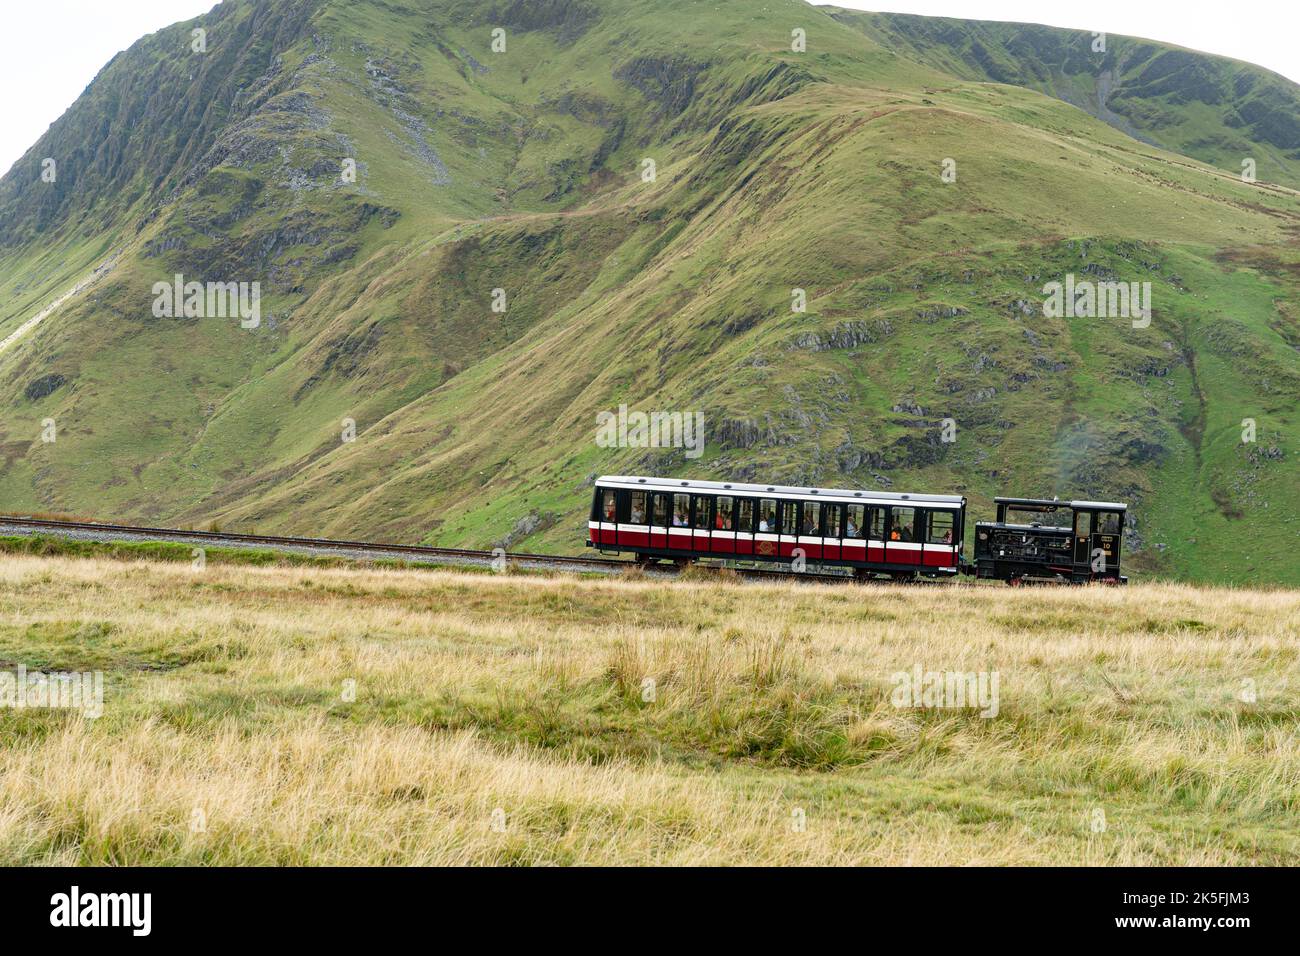 Ferrovia di Snowdon Mountain, Snowdon / Yr Wyddfa, Eryri / Snowdonia National Park, Galles, Regno Unito Foto Stock